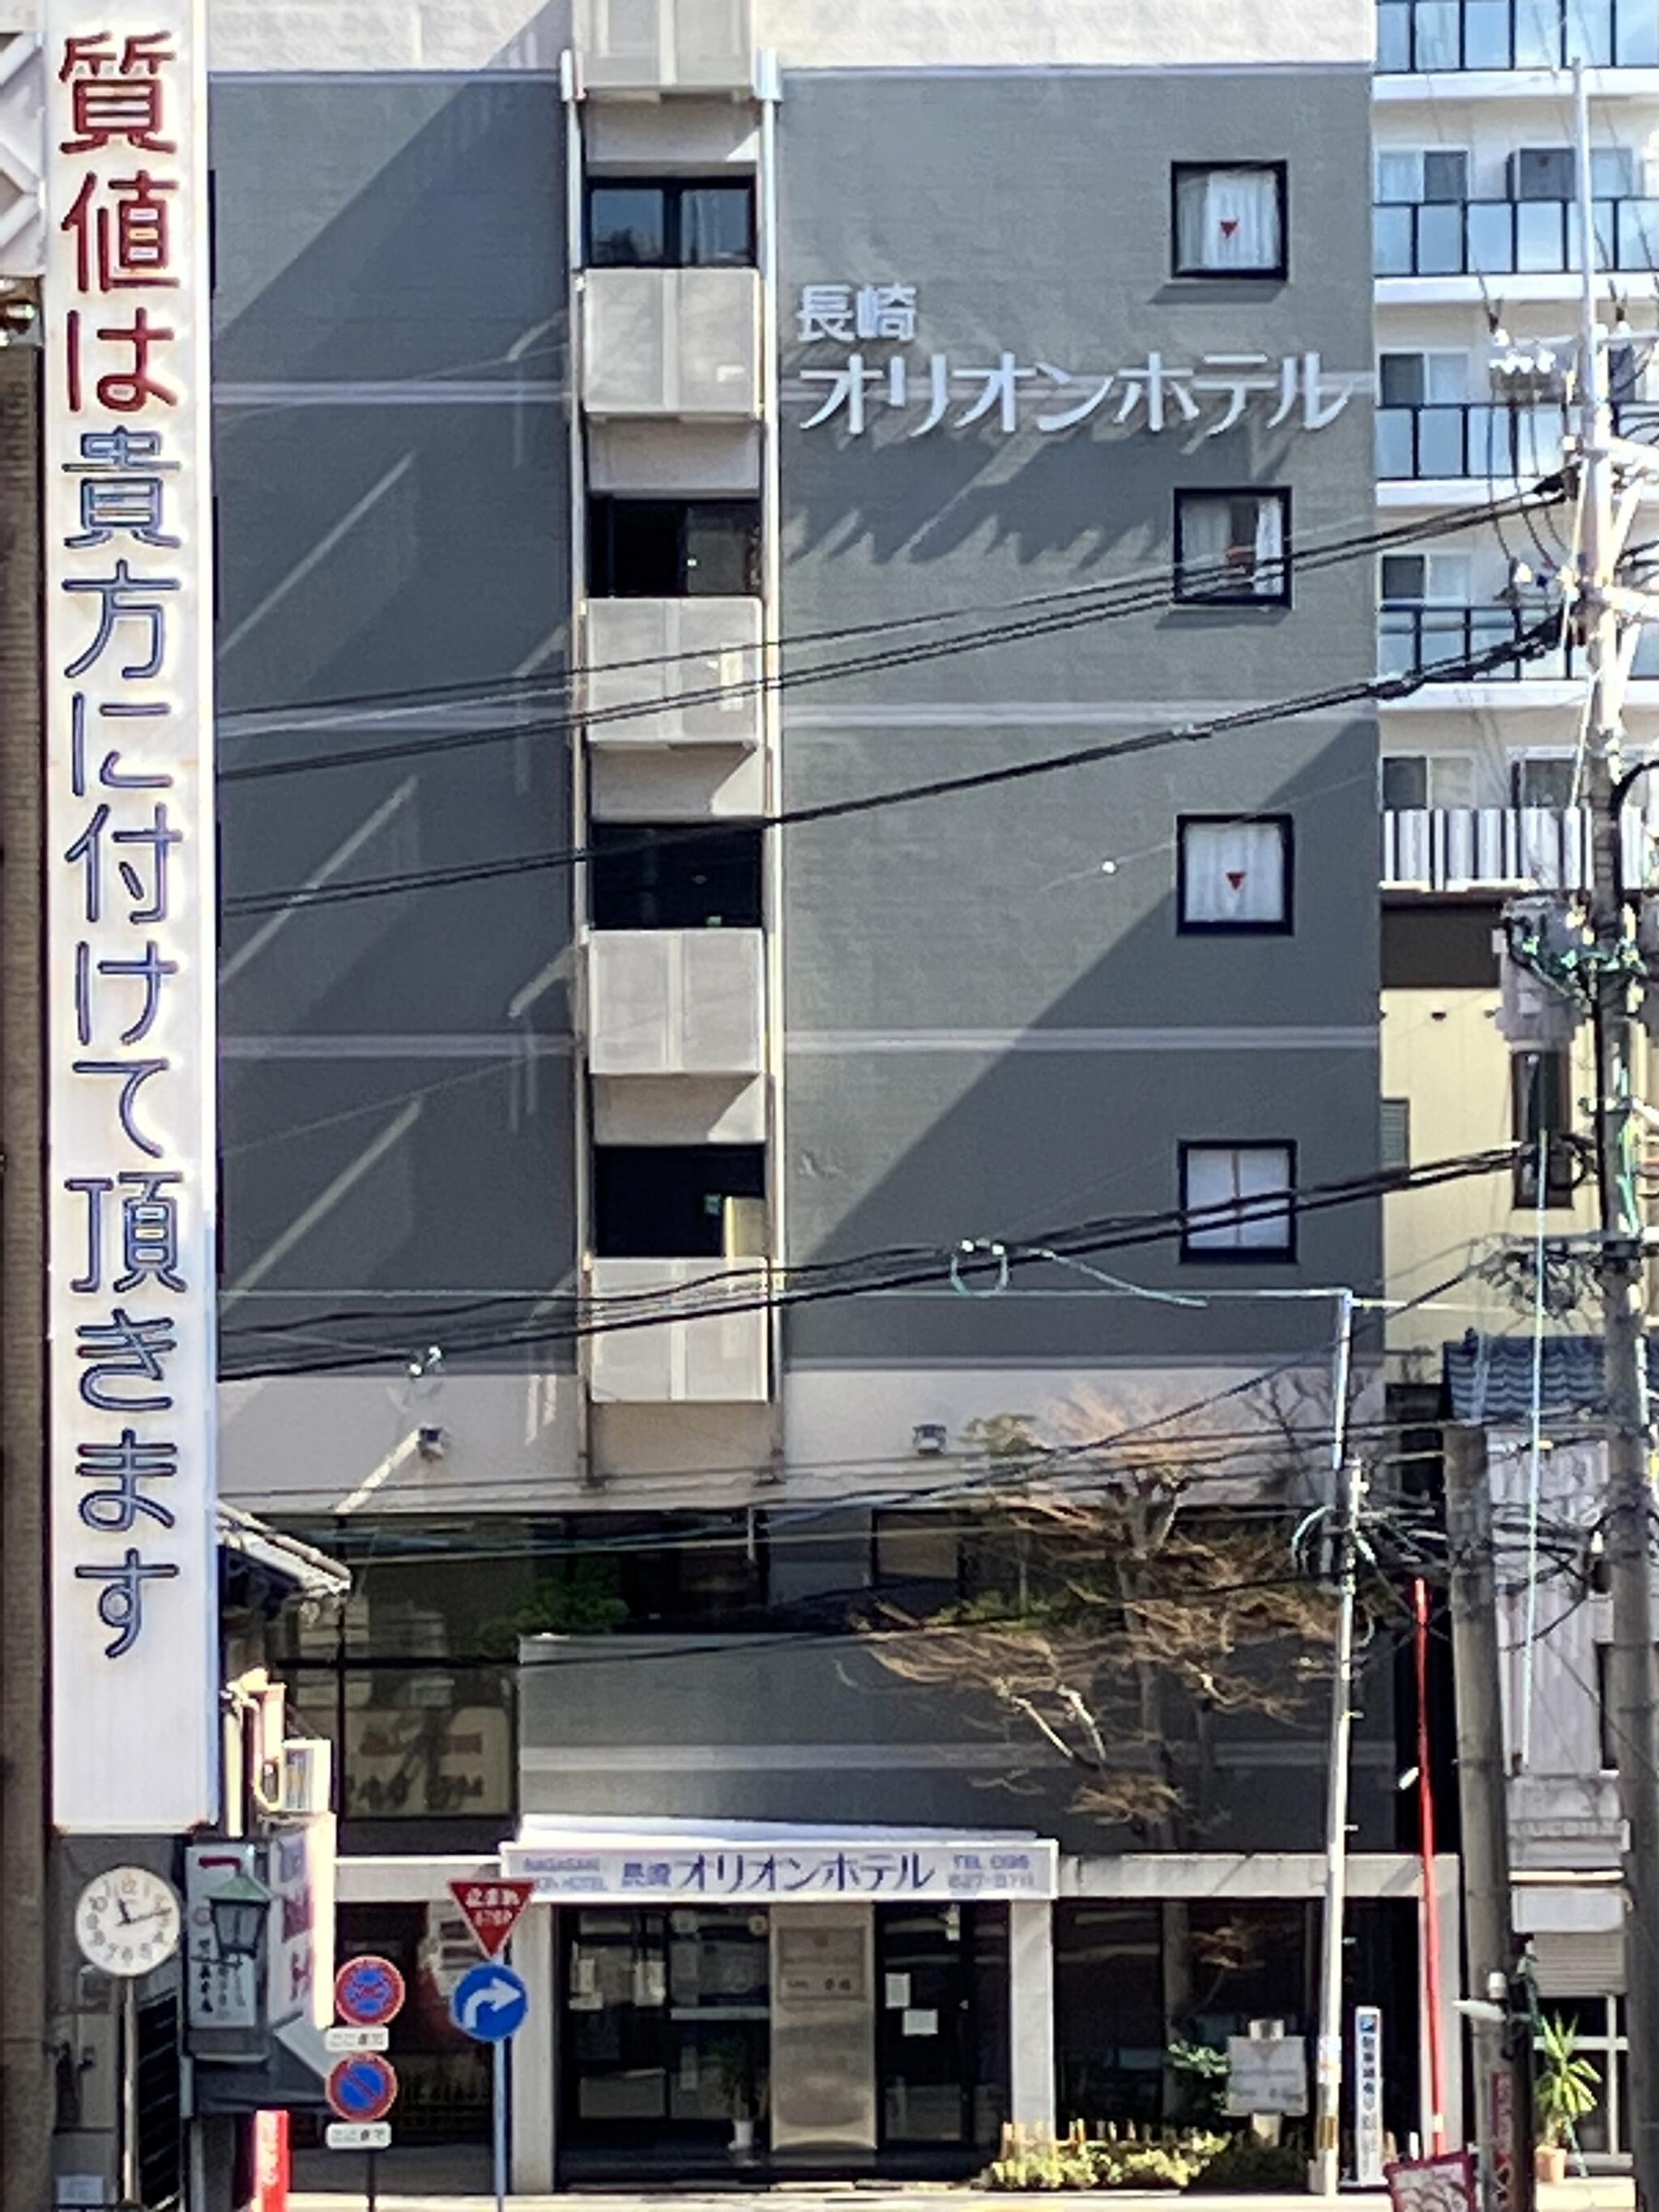 OYO 長崎オリオンホテル 長崎駅前の代表写真1